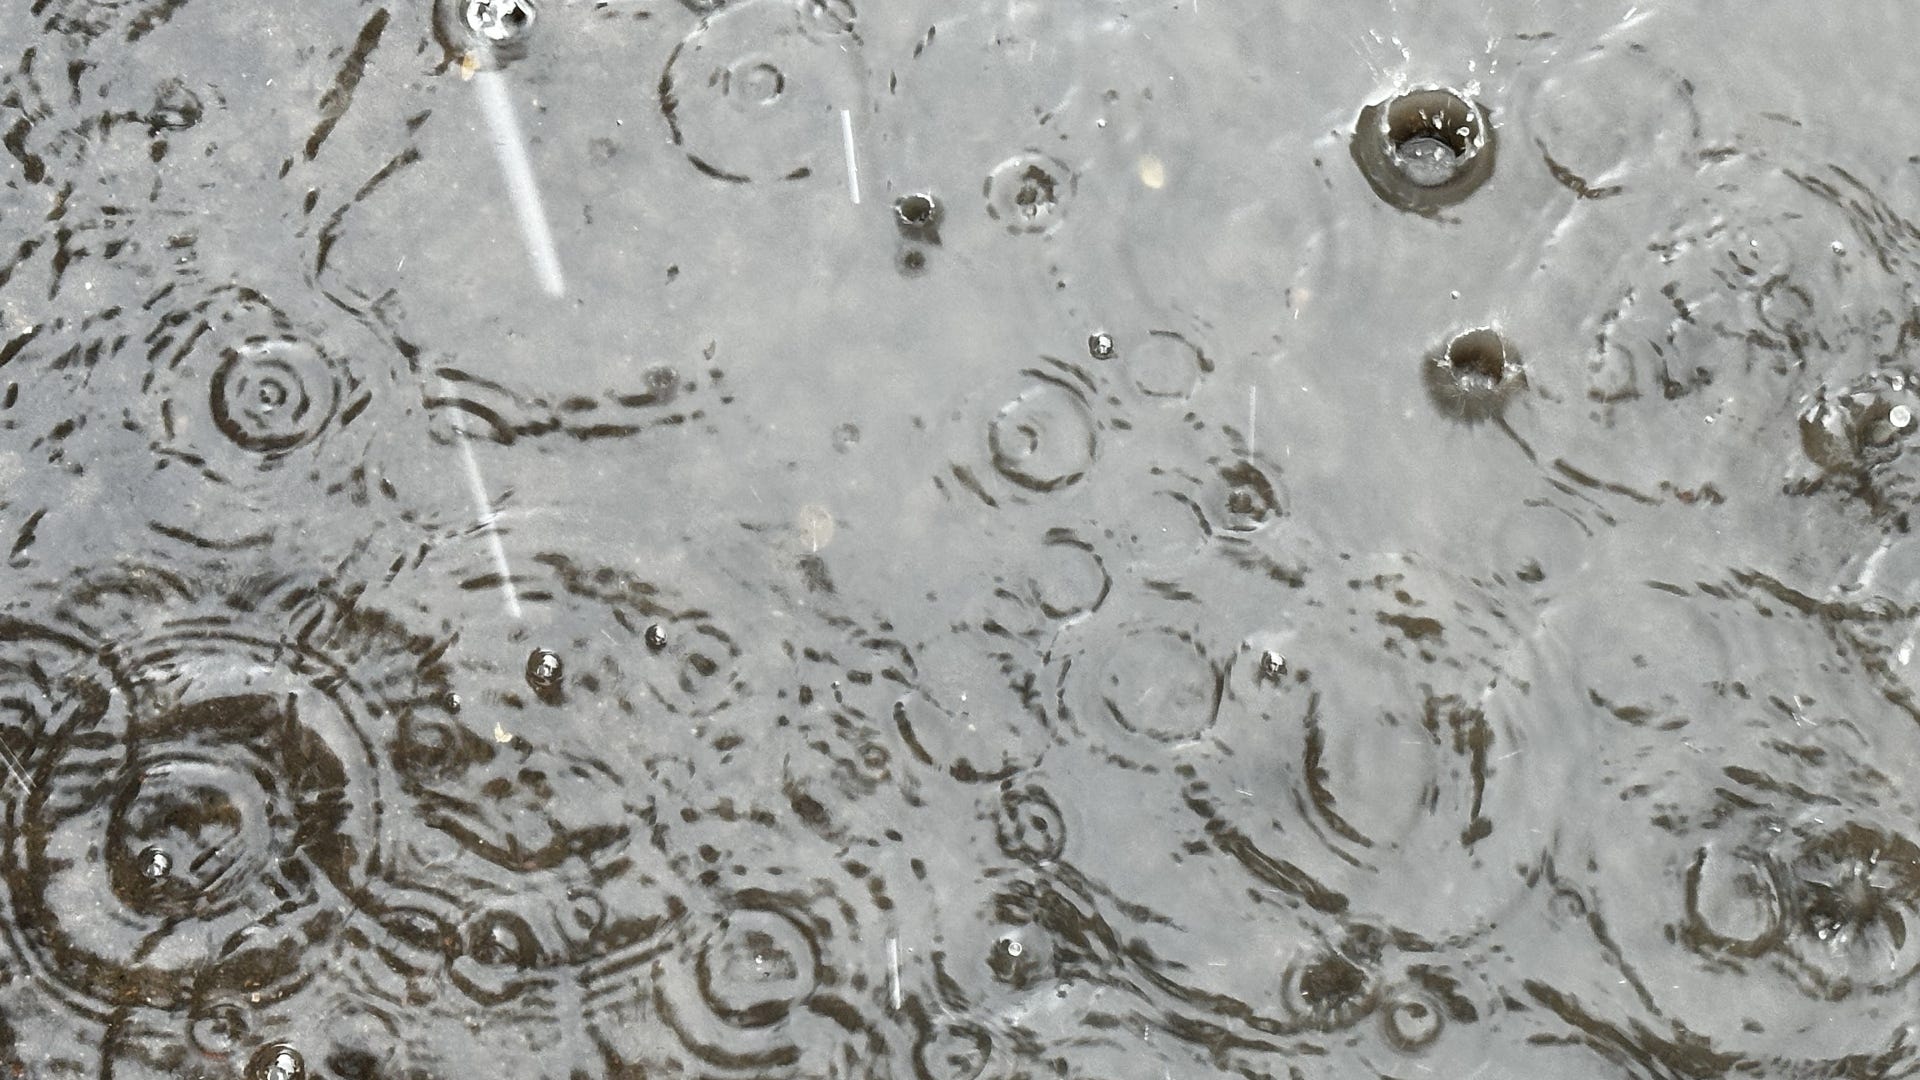 Rain drops falling on a puddle